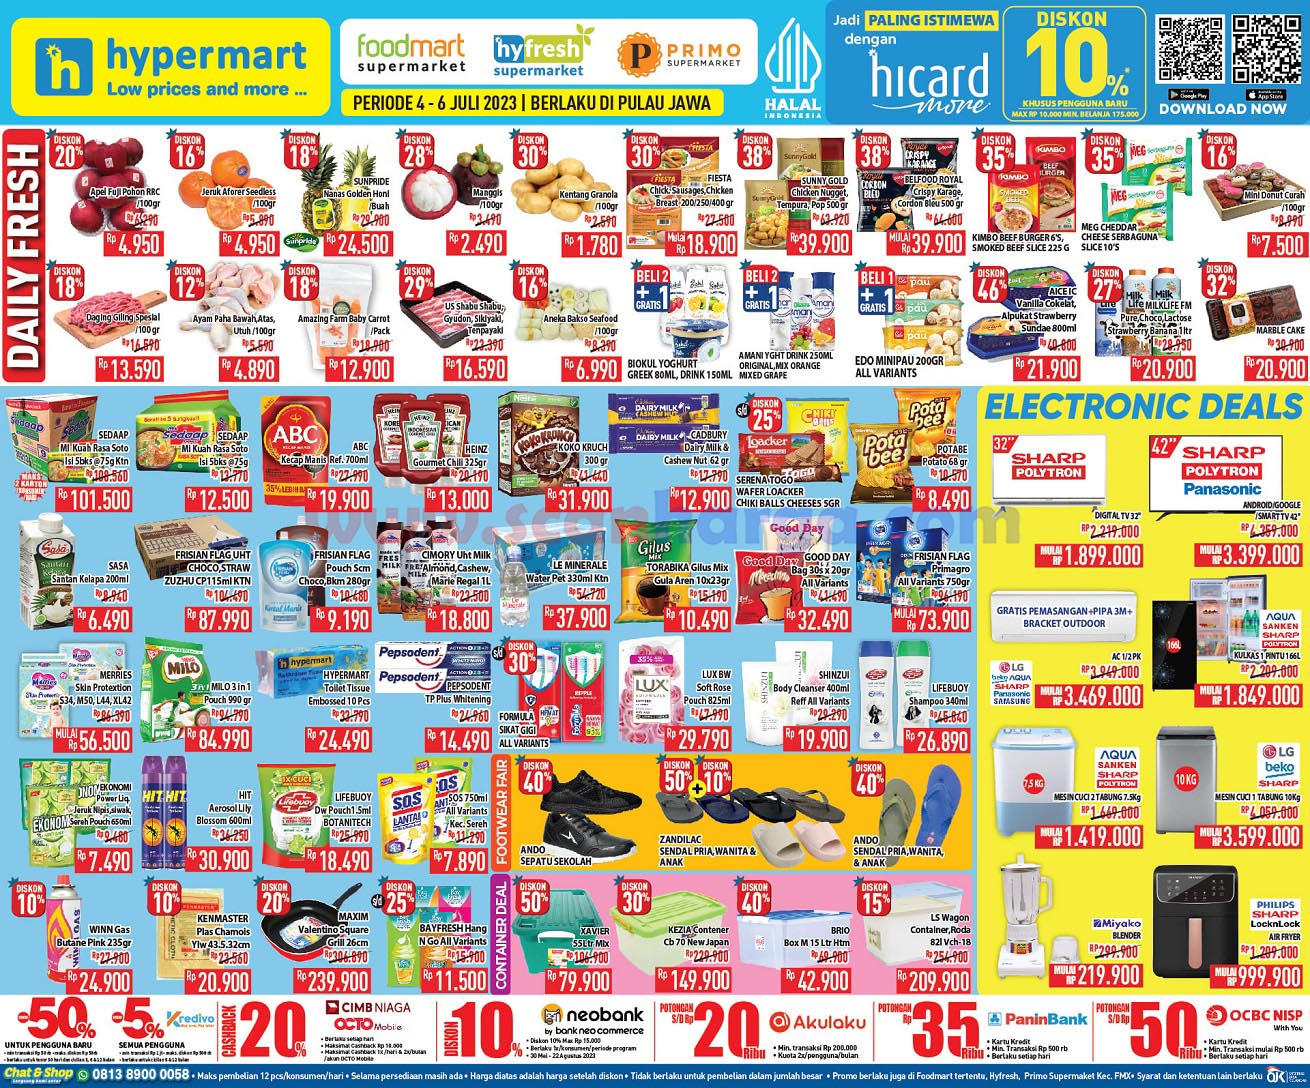 Promo Hypermart Weekday Terbaru 4 - 6 Juli 2023 2